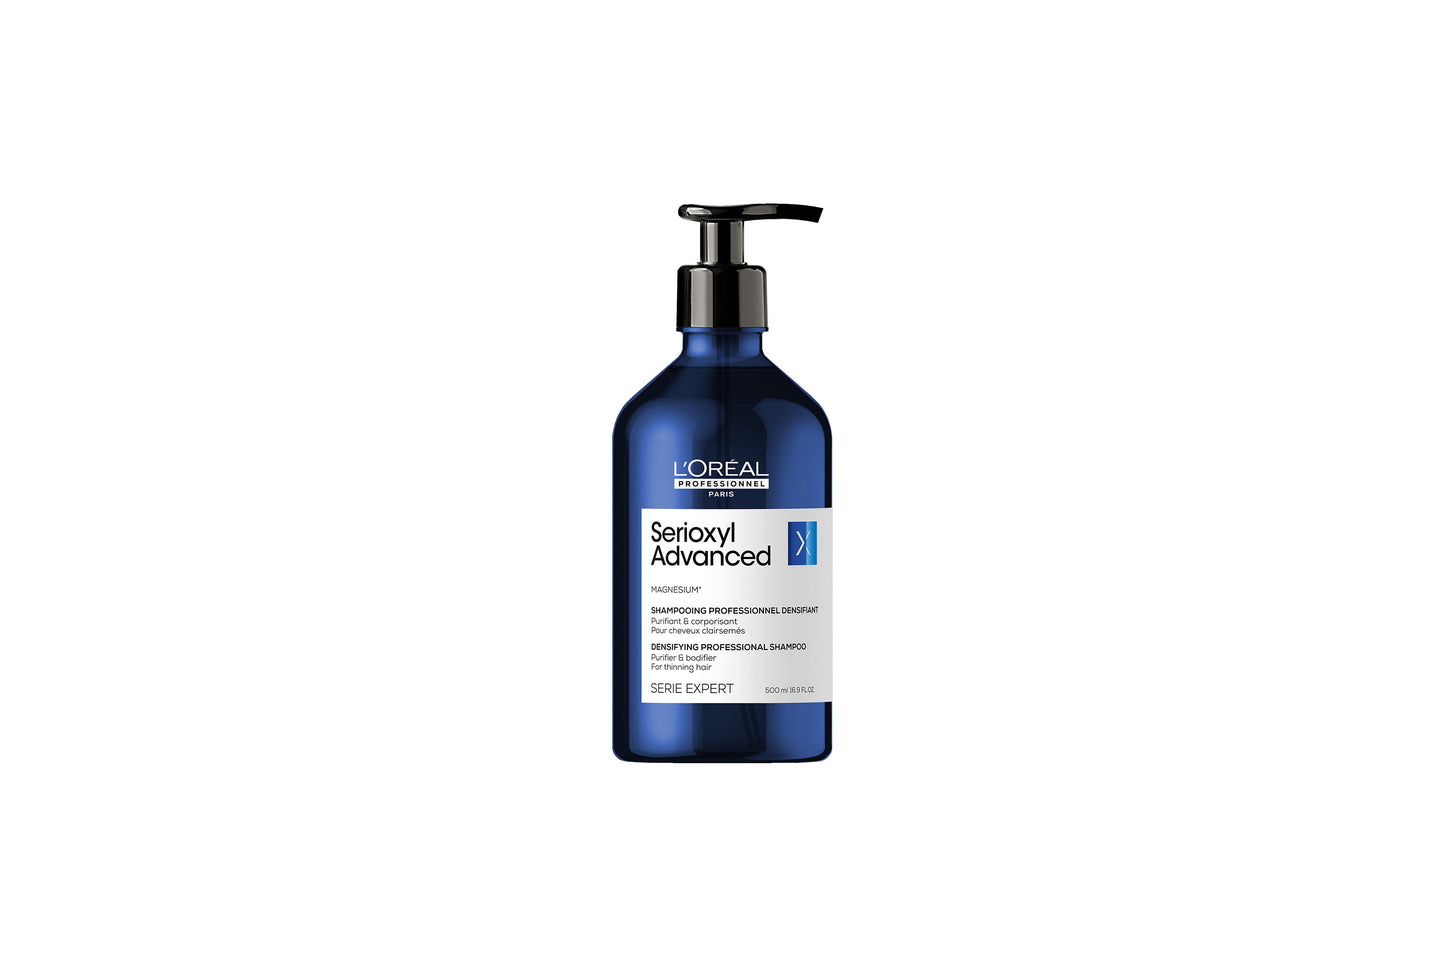 L'Oreal Serioxyl Advanced Purifier and Bodifier Shampoo 500ml